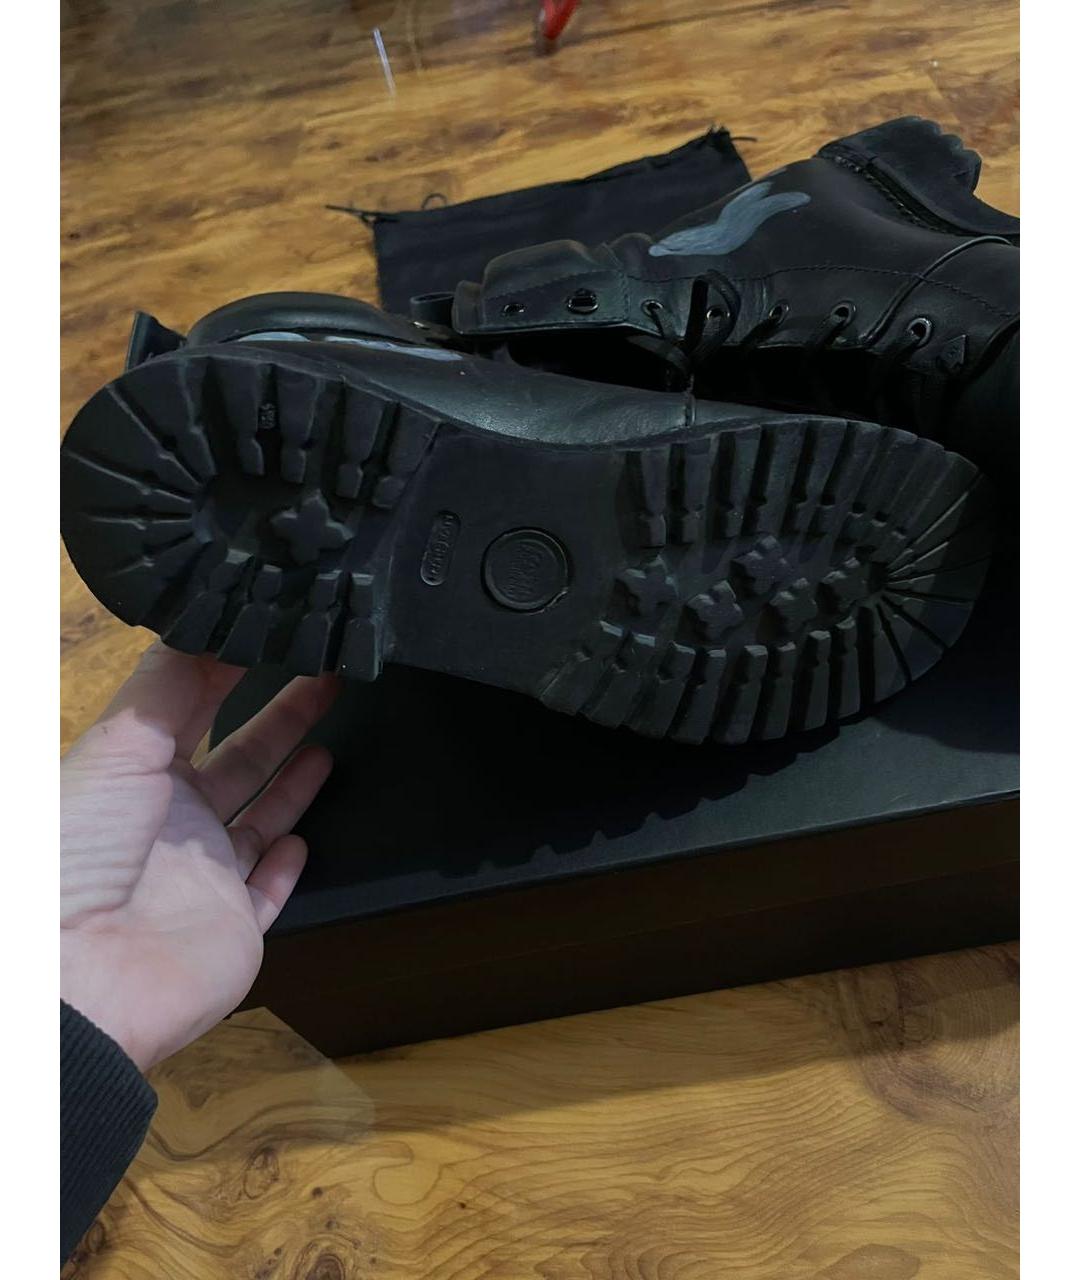 KARL LAGERFELD Черные кожаные ботинки, фото 5